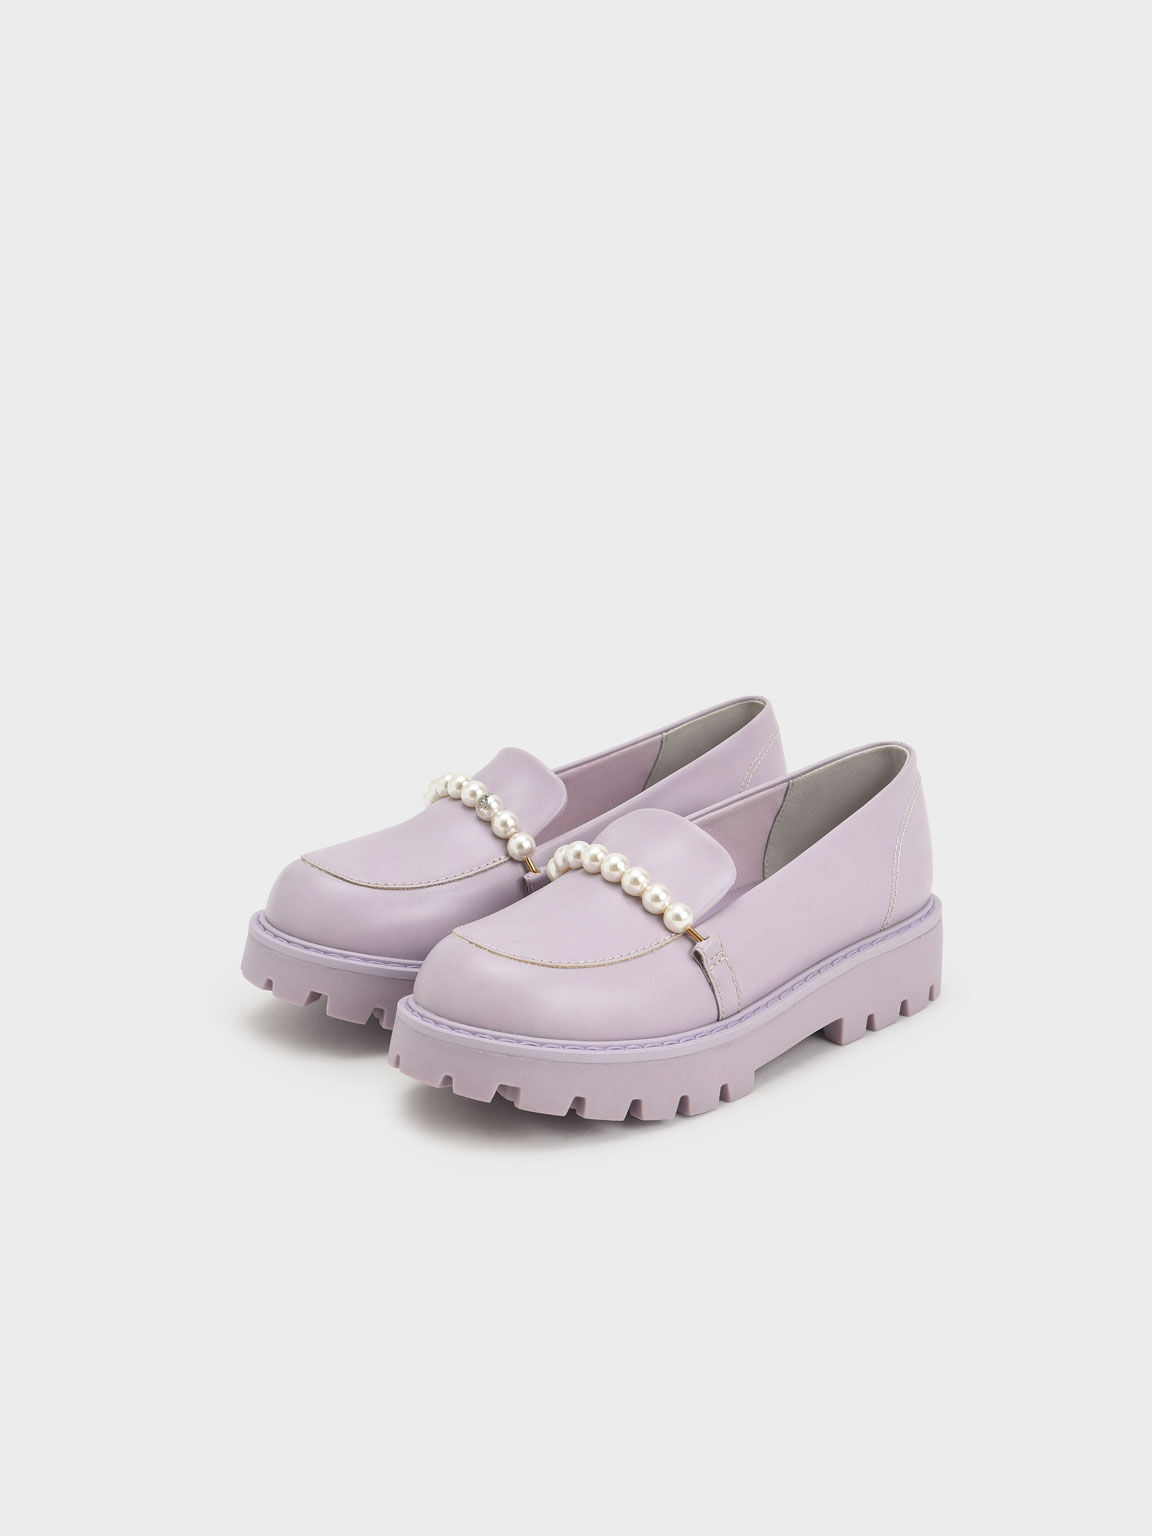 Girls' Pearl-Embellished Loafers, Lilac, hi-res